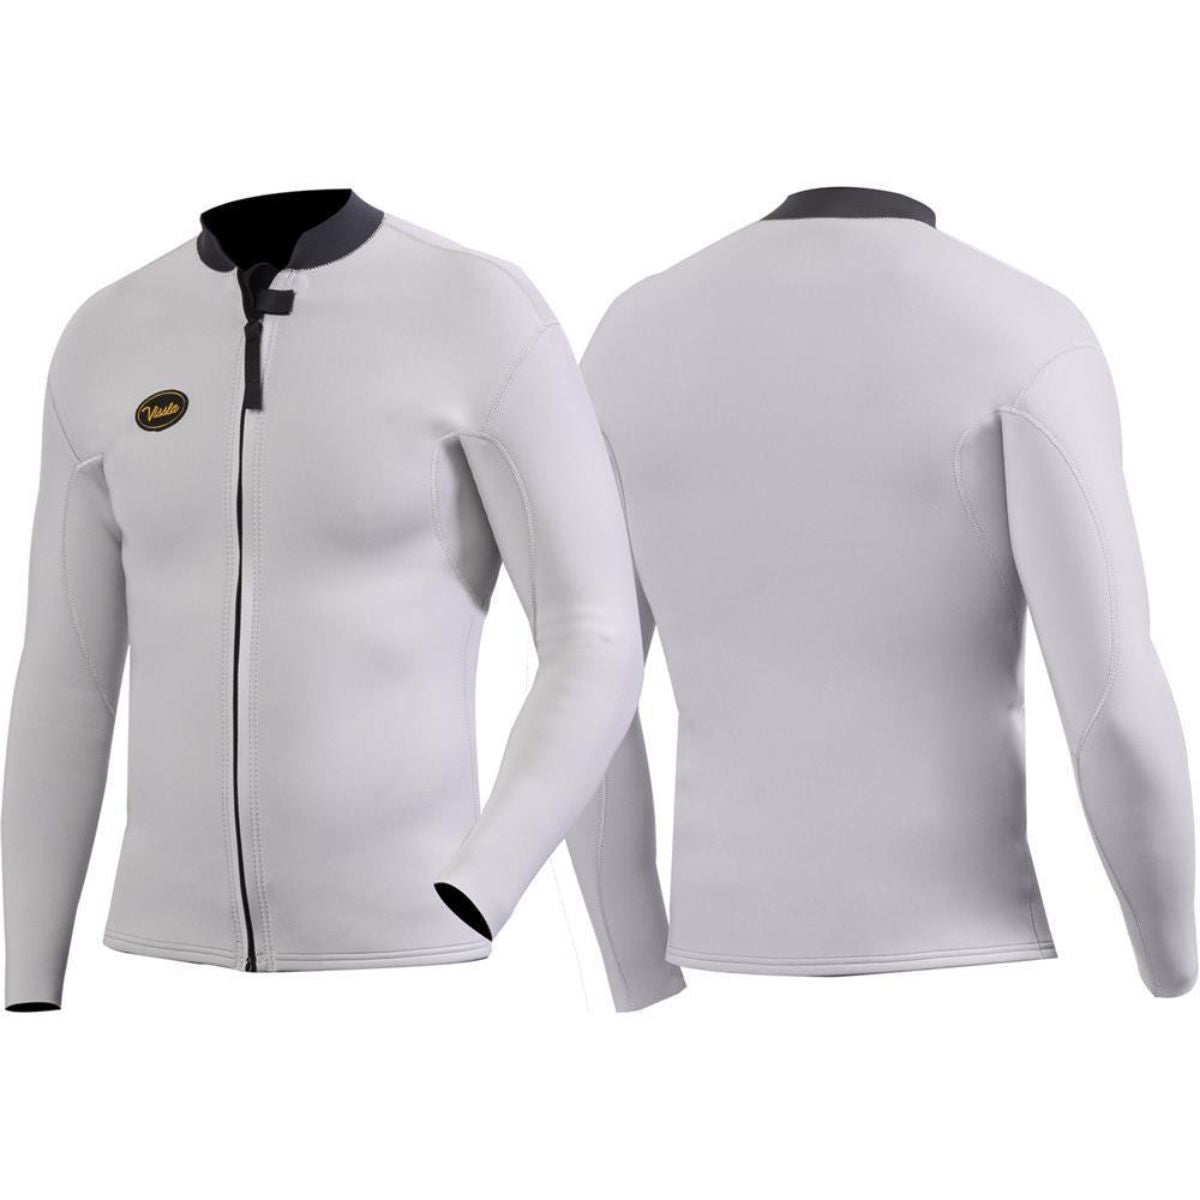 Vissla 2mm Solid Sets Front Zip Jacket in Off White - BoardCo